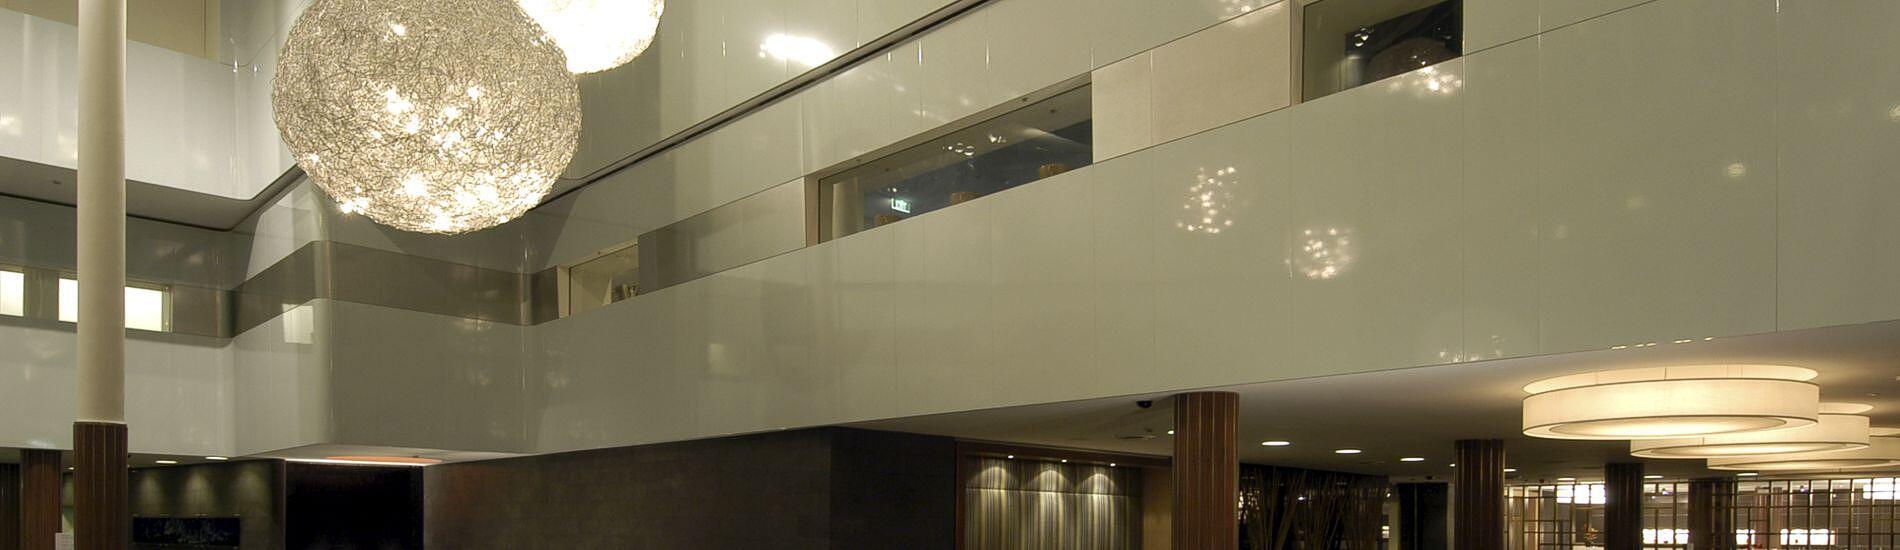 SUPALINE high gloss internal wall panels in vast hotel lobby